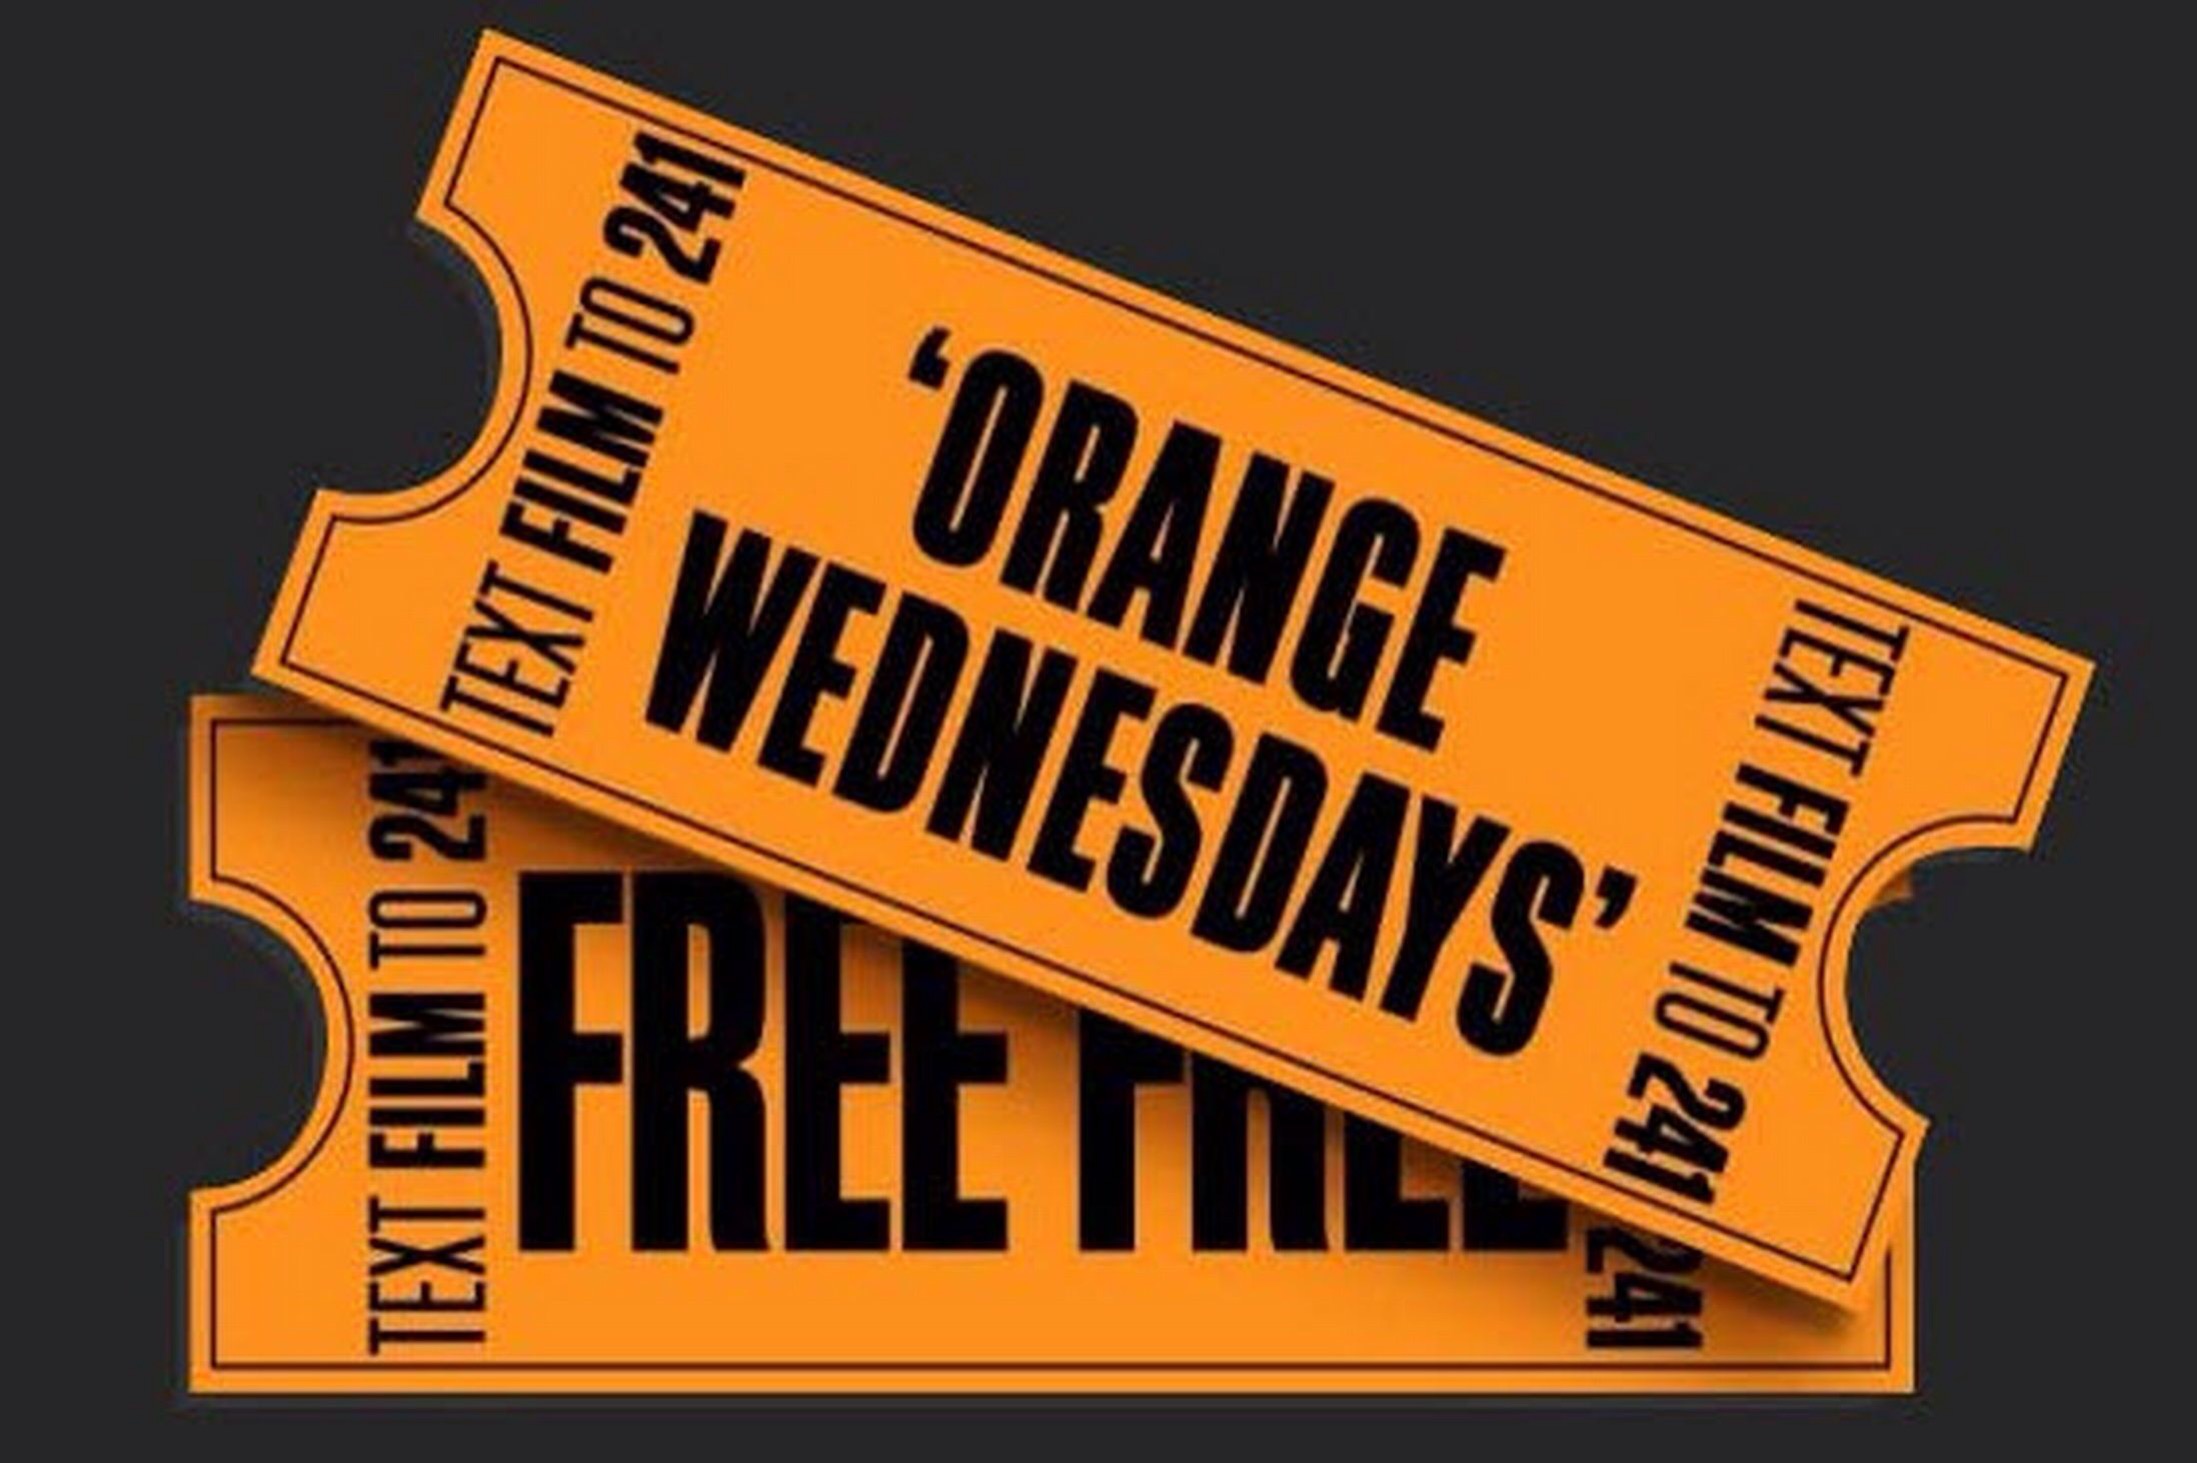 Orange Wednesdays returning (in a fashion); Blockbuster films for £1